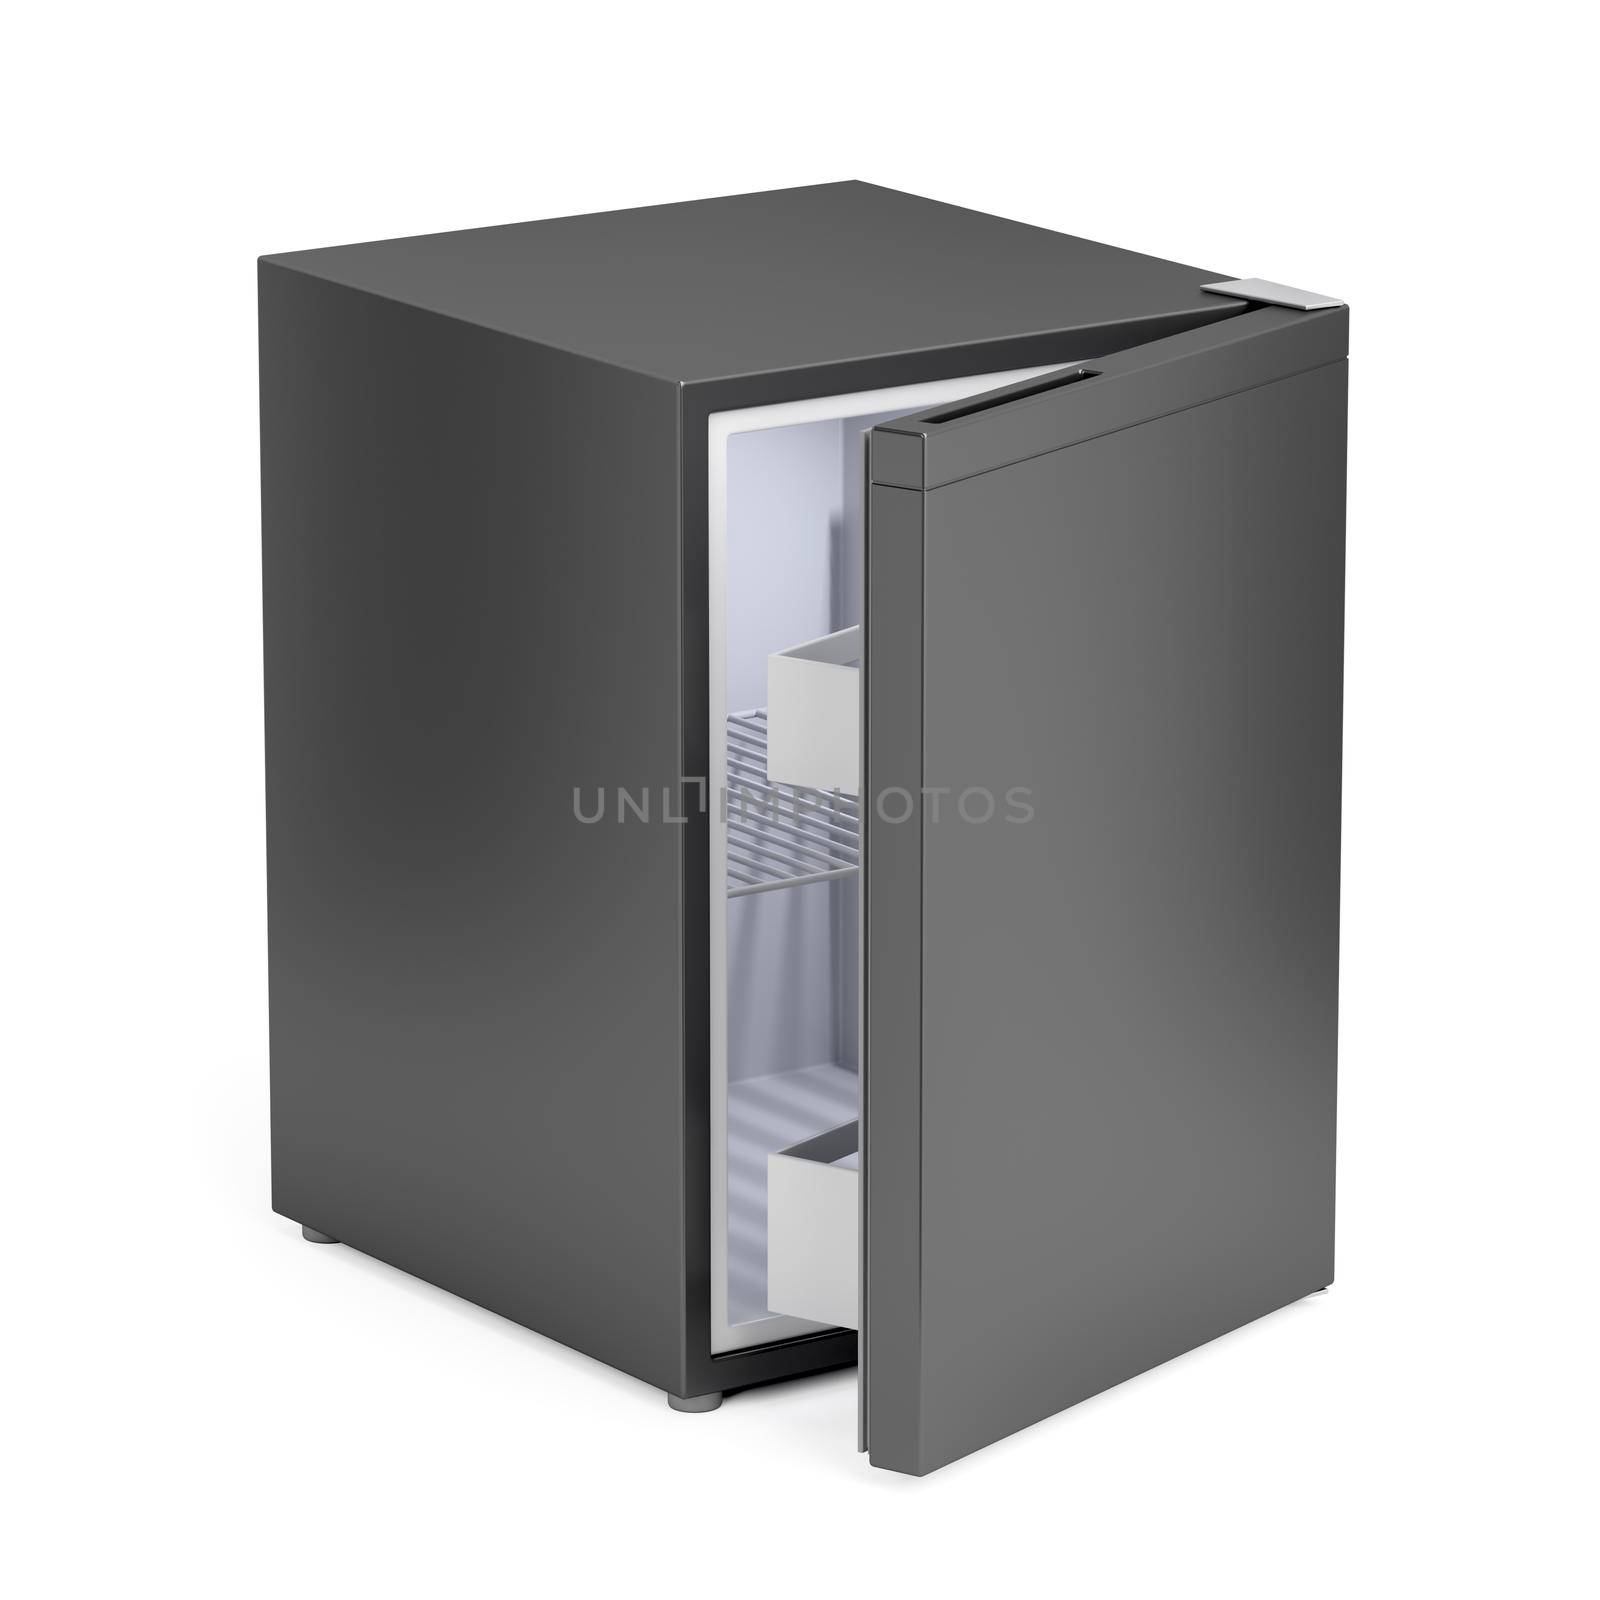 Small black refrigerator on white background